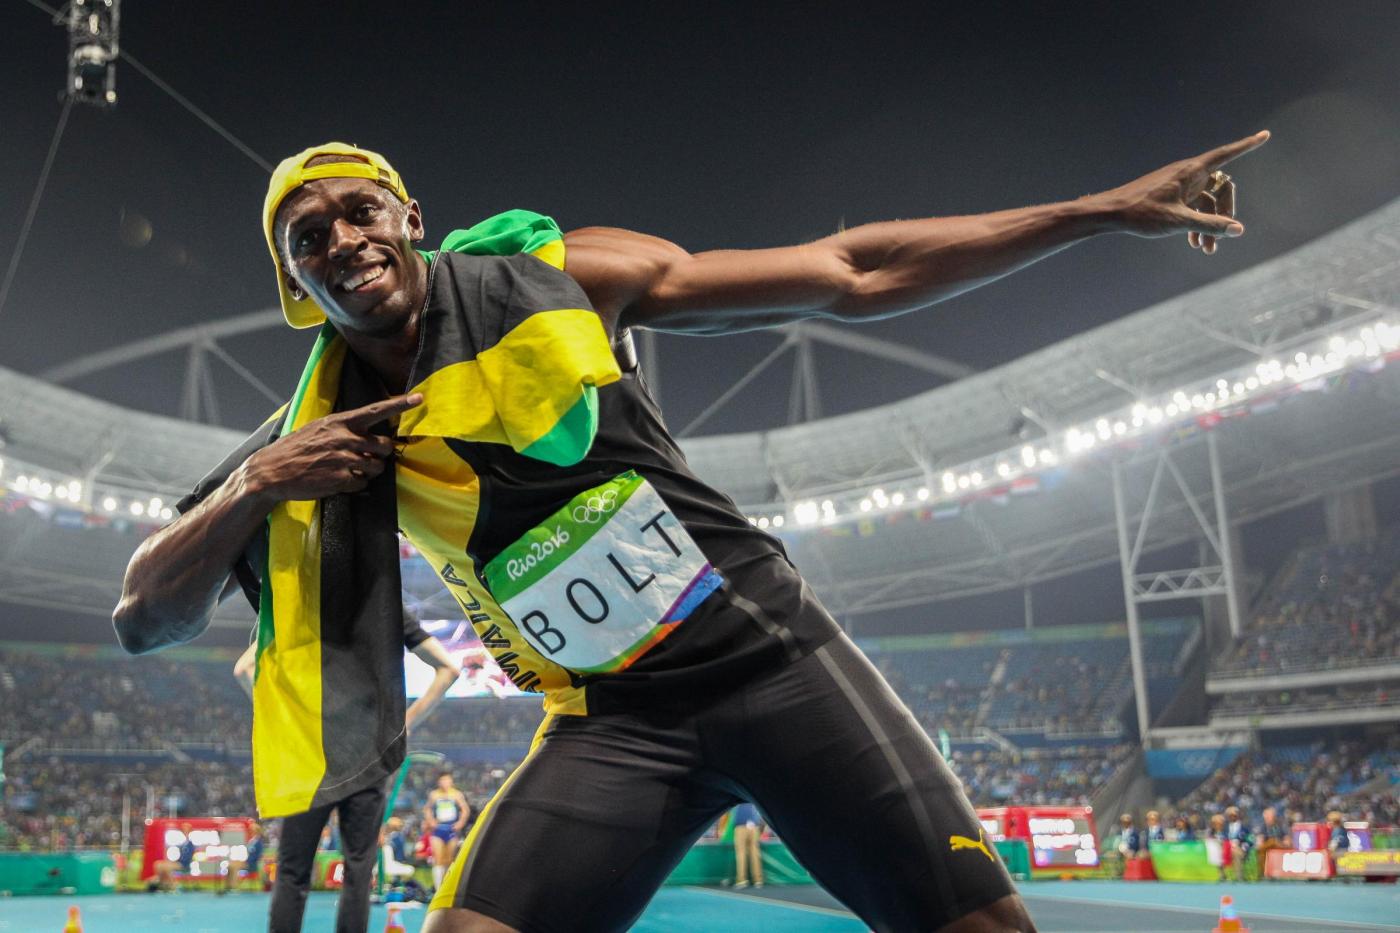 Atletica, Usain Bolt medaglia d'oro nei 100 metri Olimpiadi Rio 2016